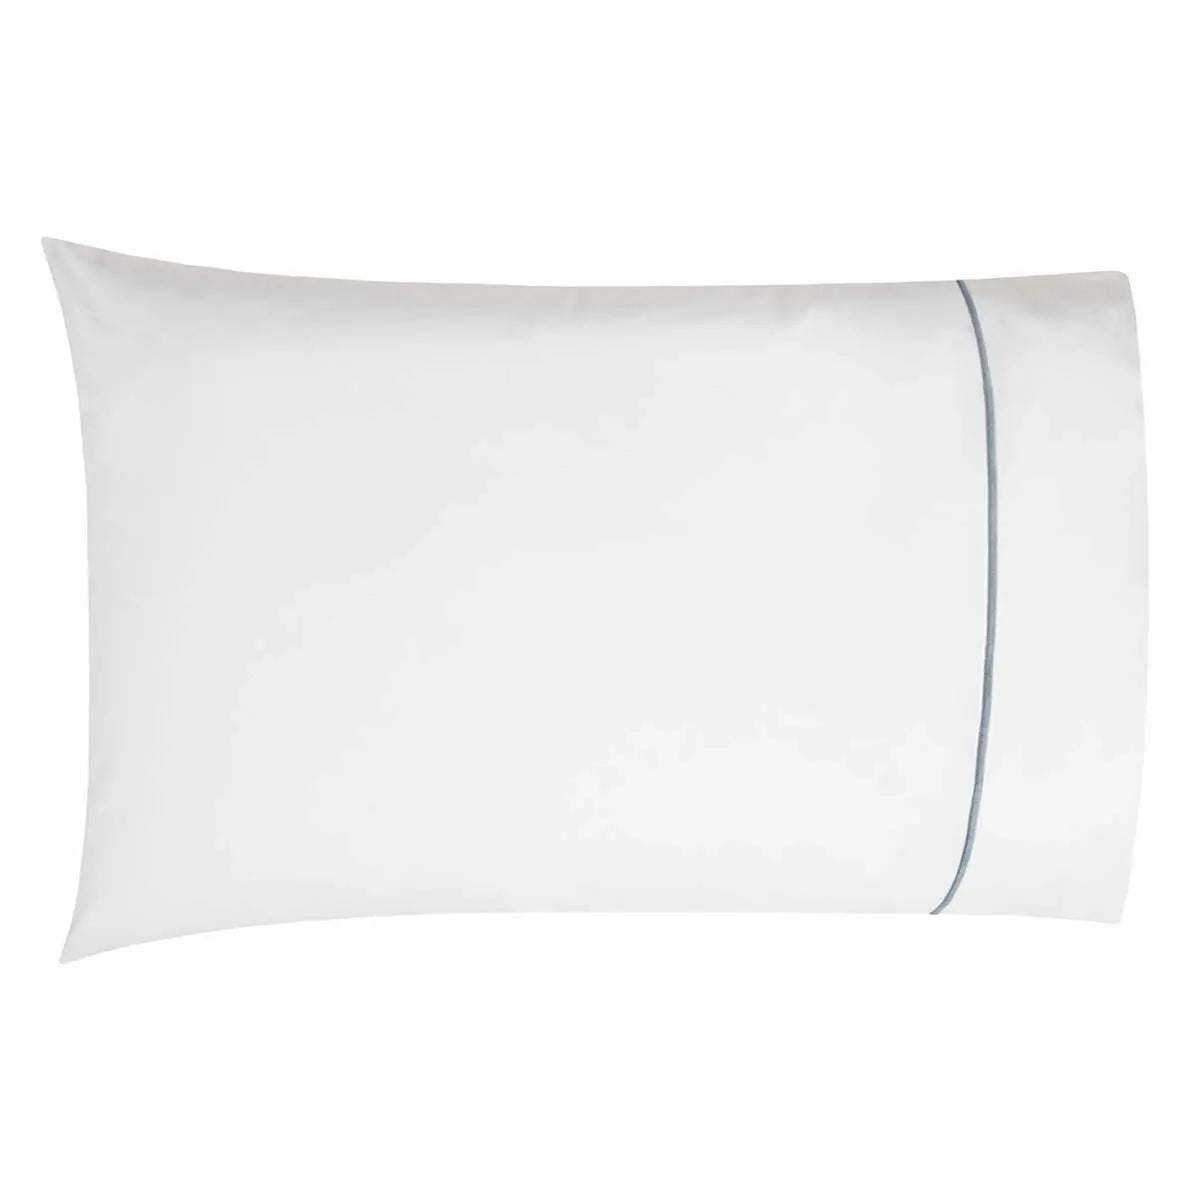 Bovi Classic Hotel Pillowcase Pair in White/Blue 